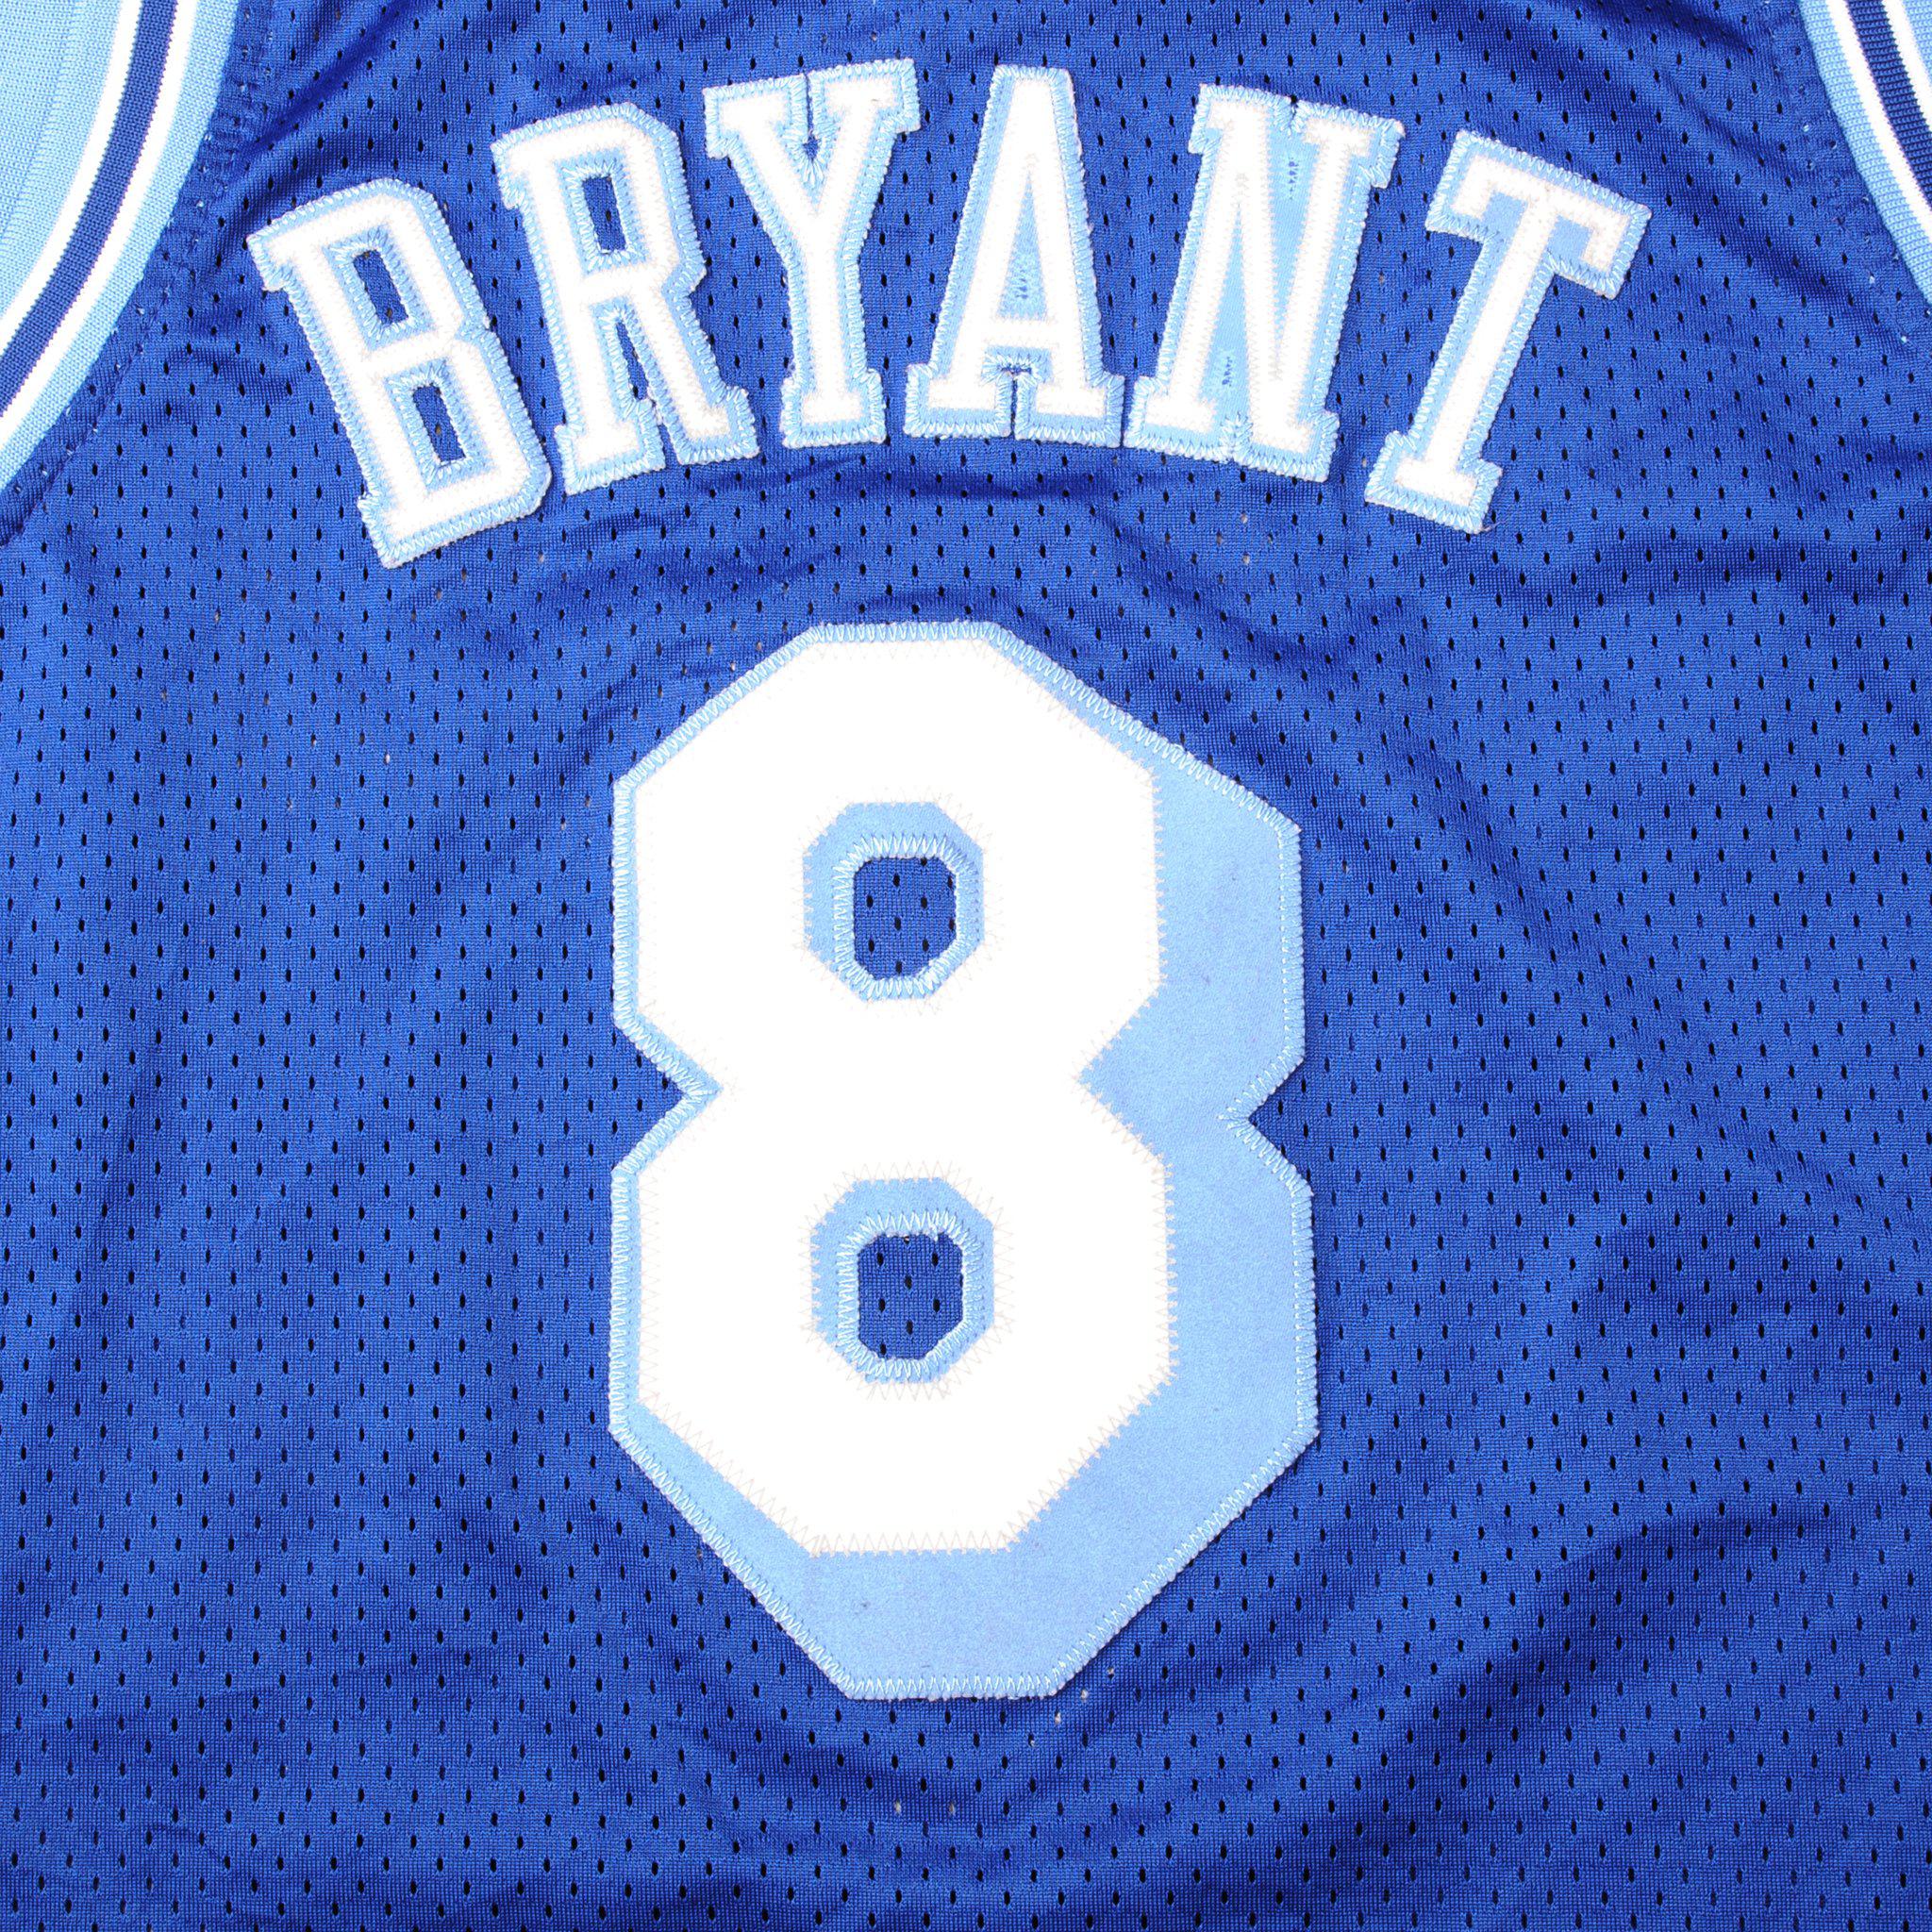 Vintage Nike Los Angeles Lakers Kobe Bryant 8 Swingman Jersey Mens XL Sewn  81